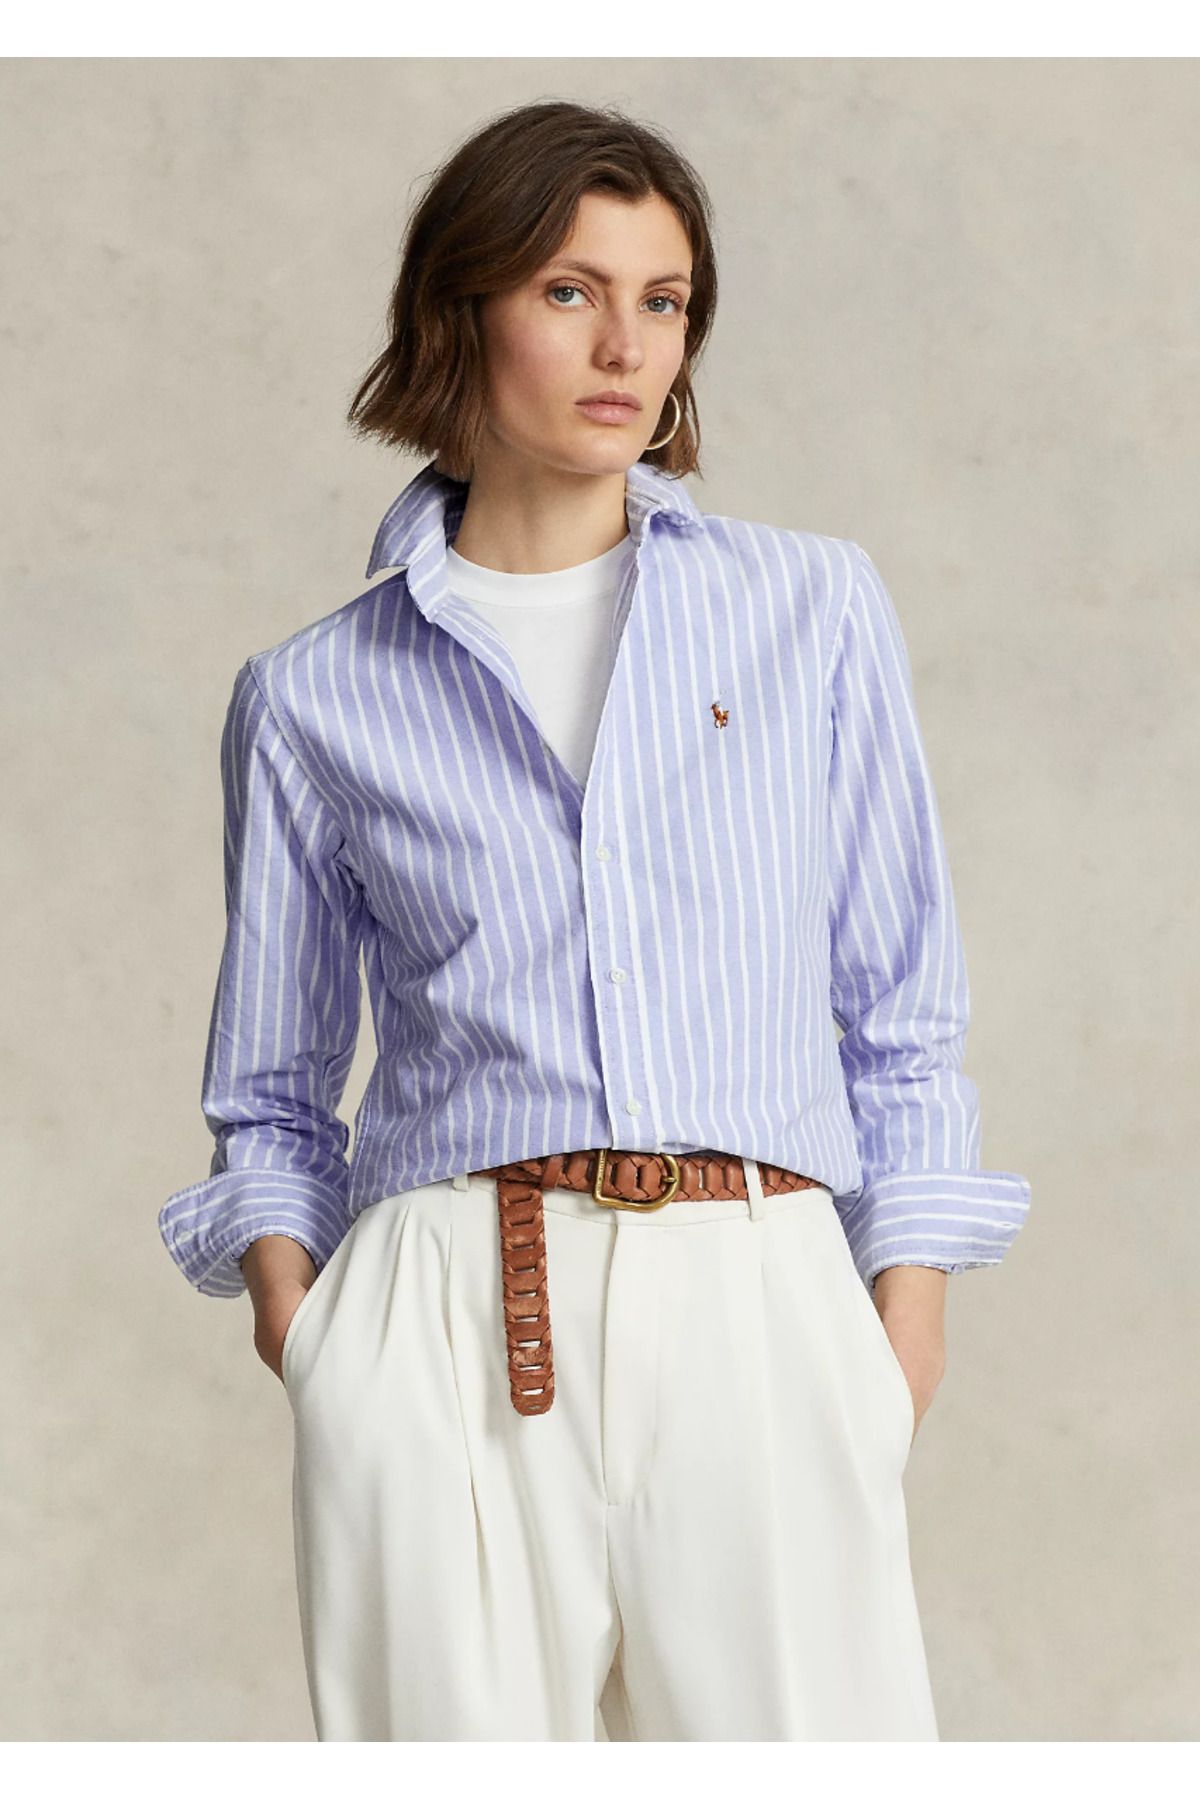 Ralph Lauren Classic Fit Striped Oxford Shirt